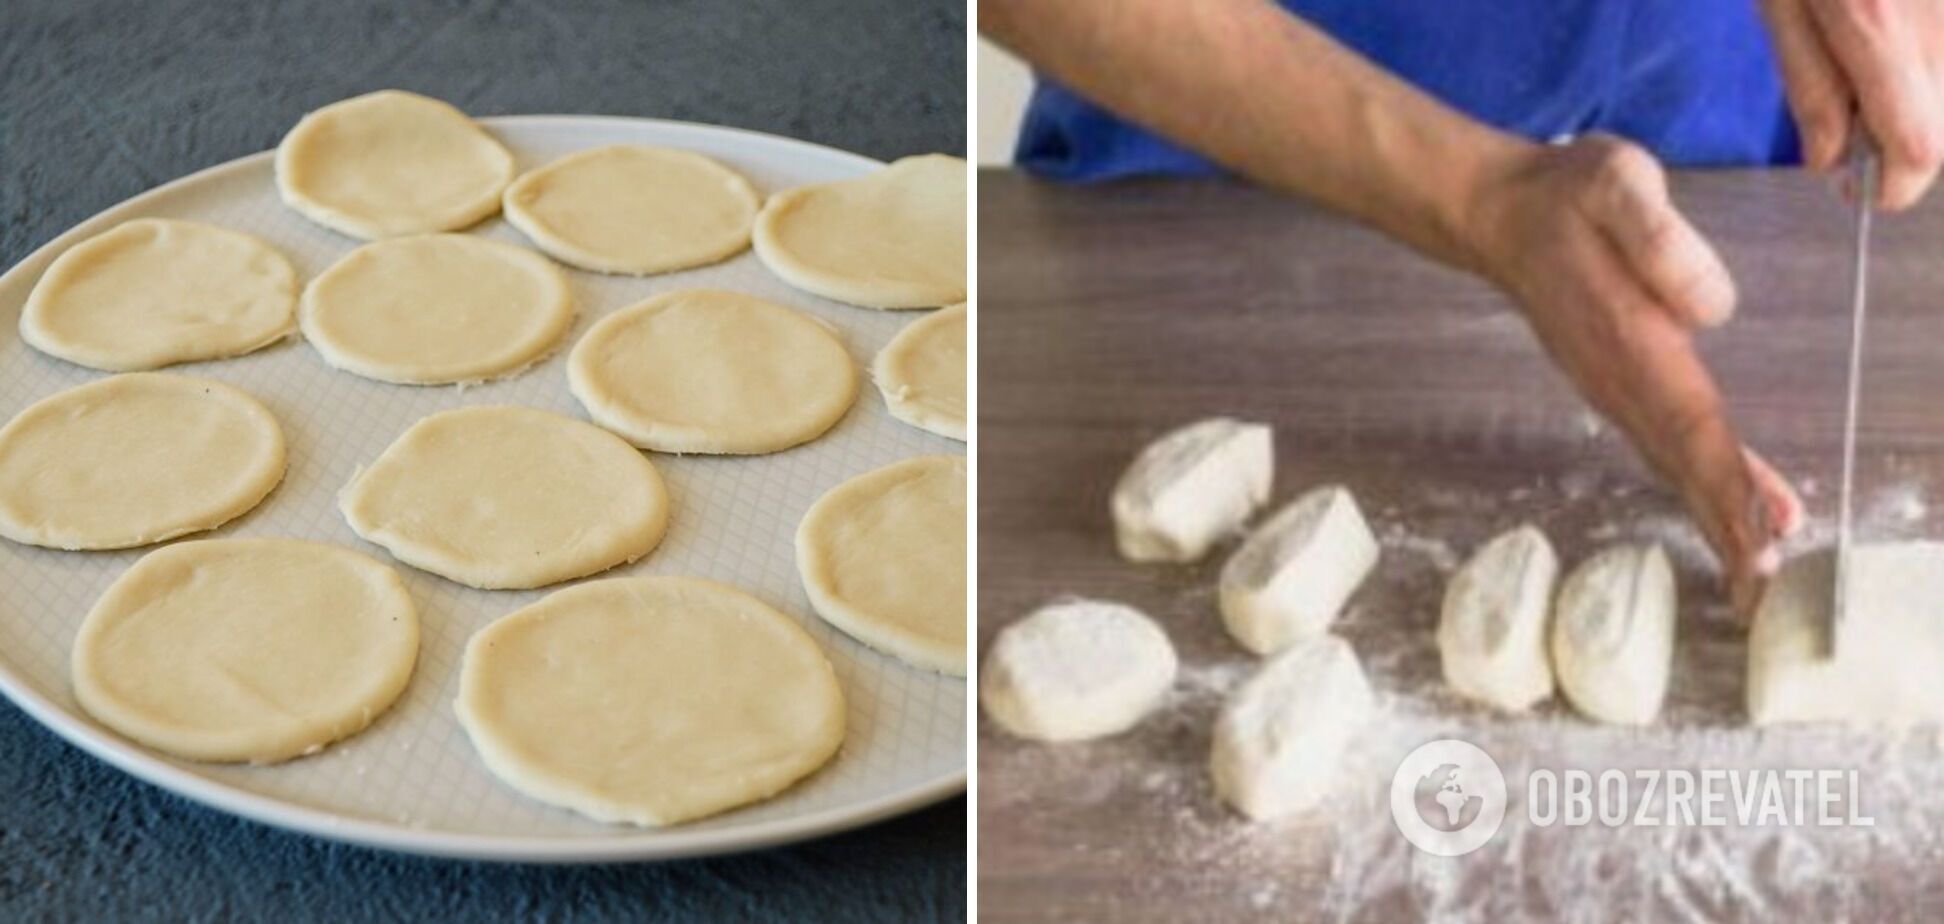 The perfect dough for dumplings